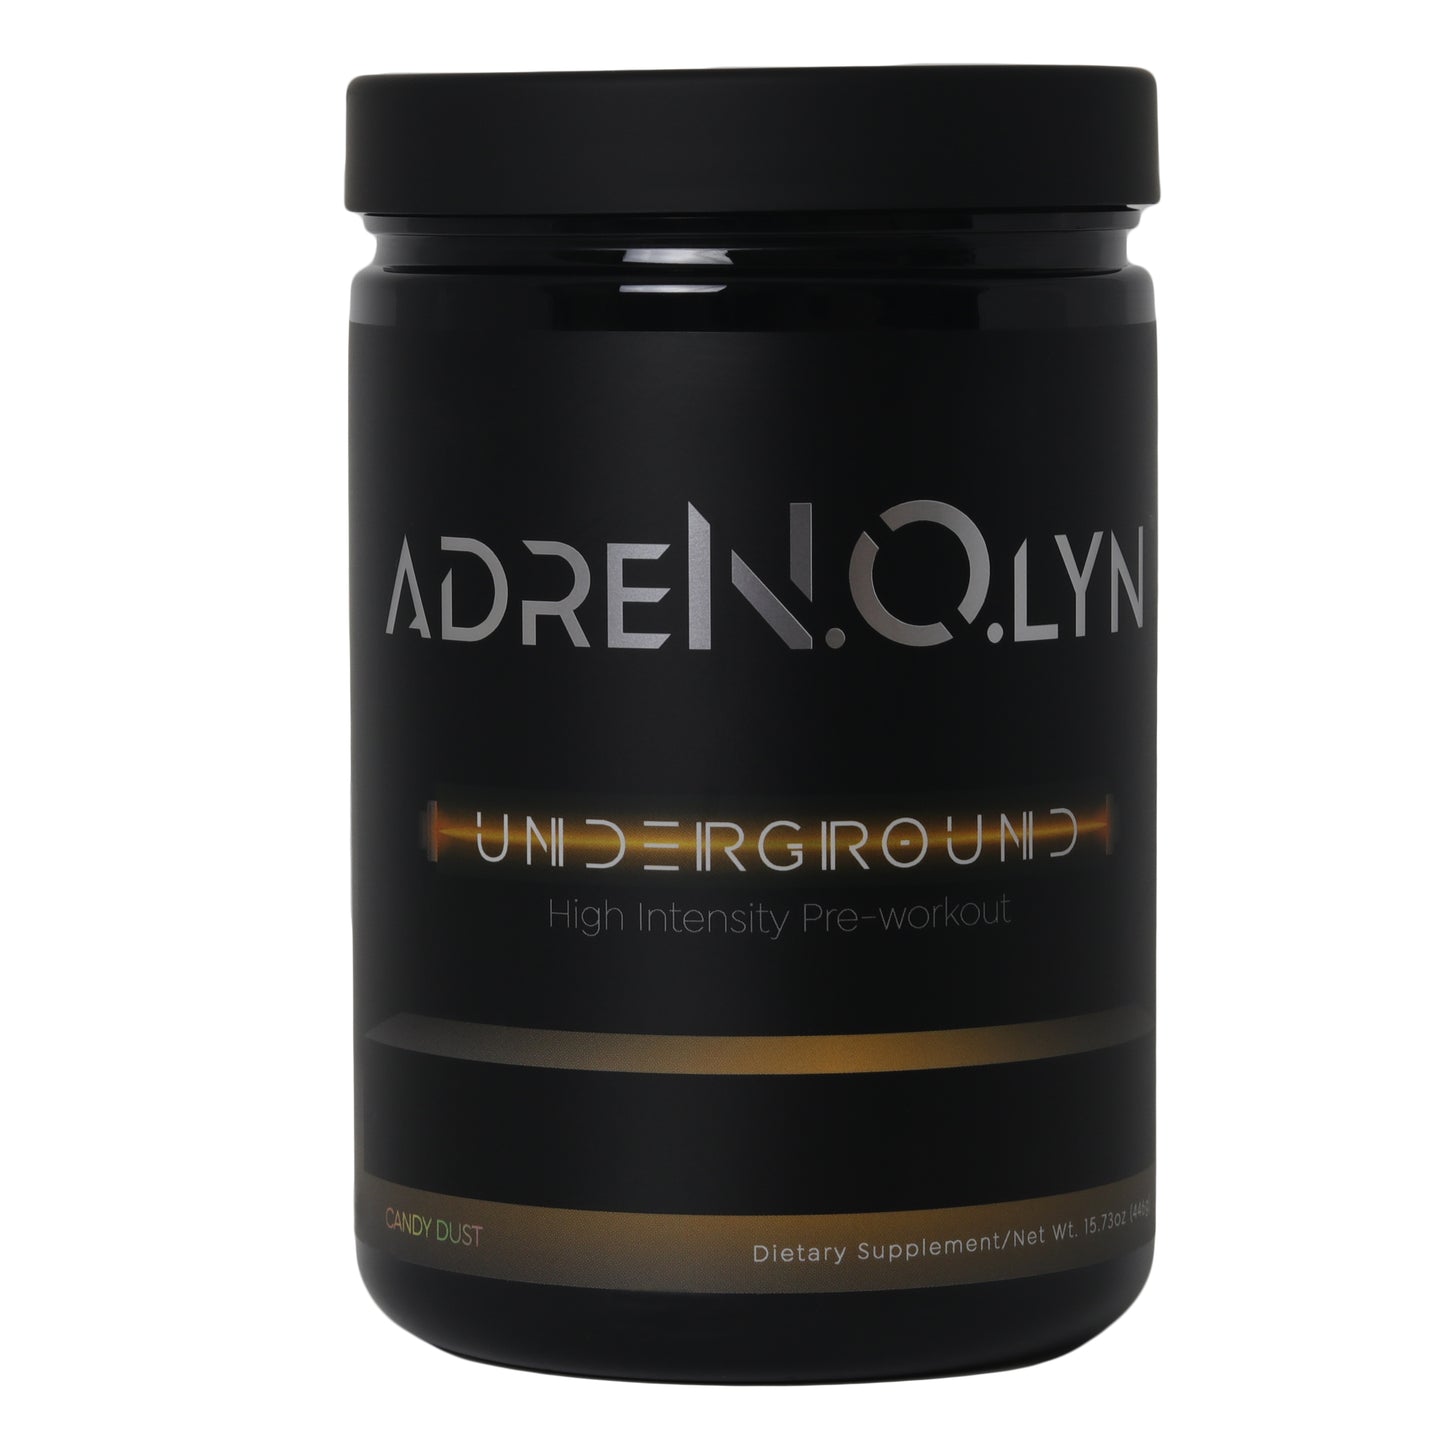 BlackMarket: Adren.O.lyn Underground Candy Dust 25 Servings